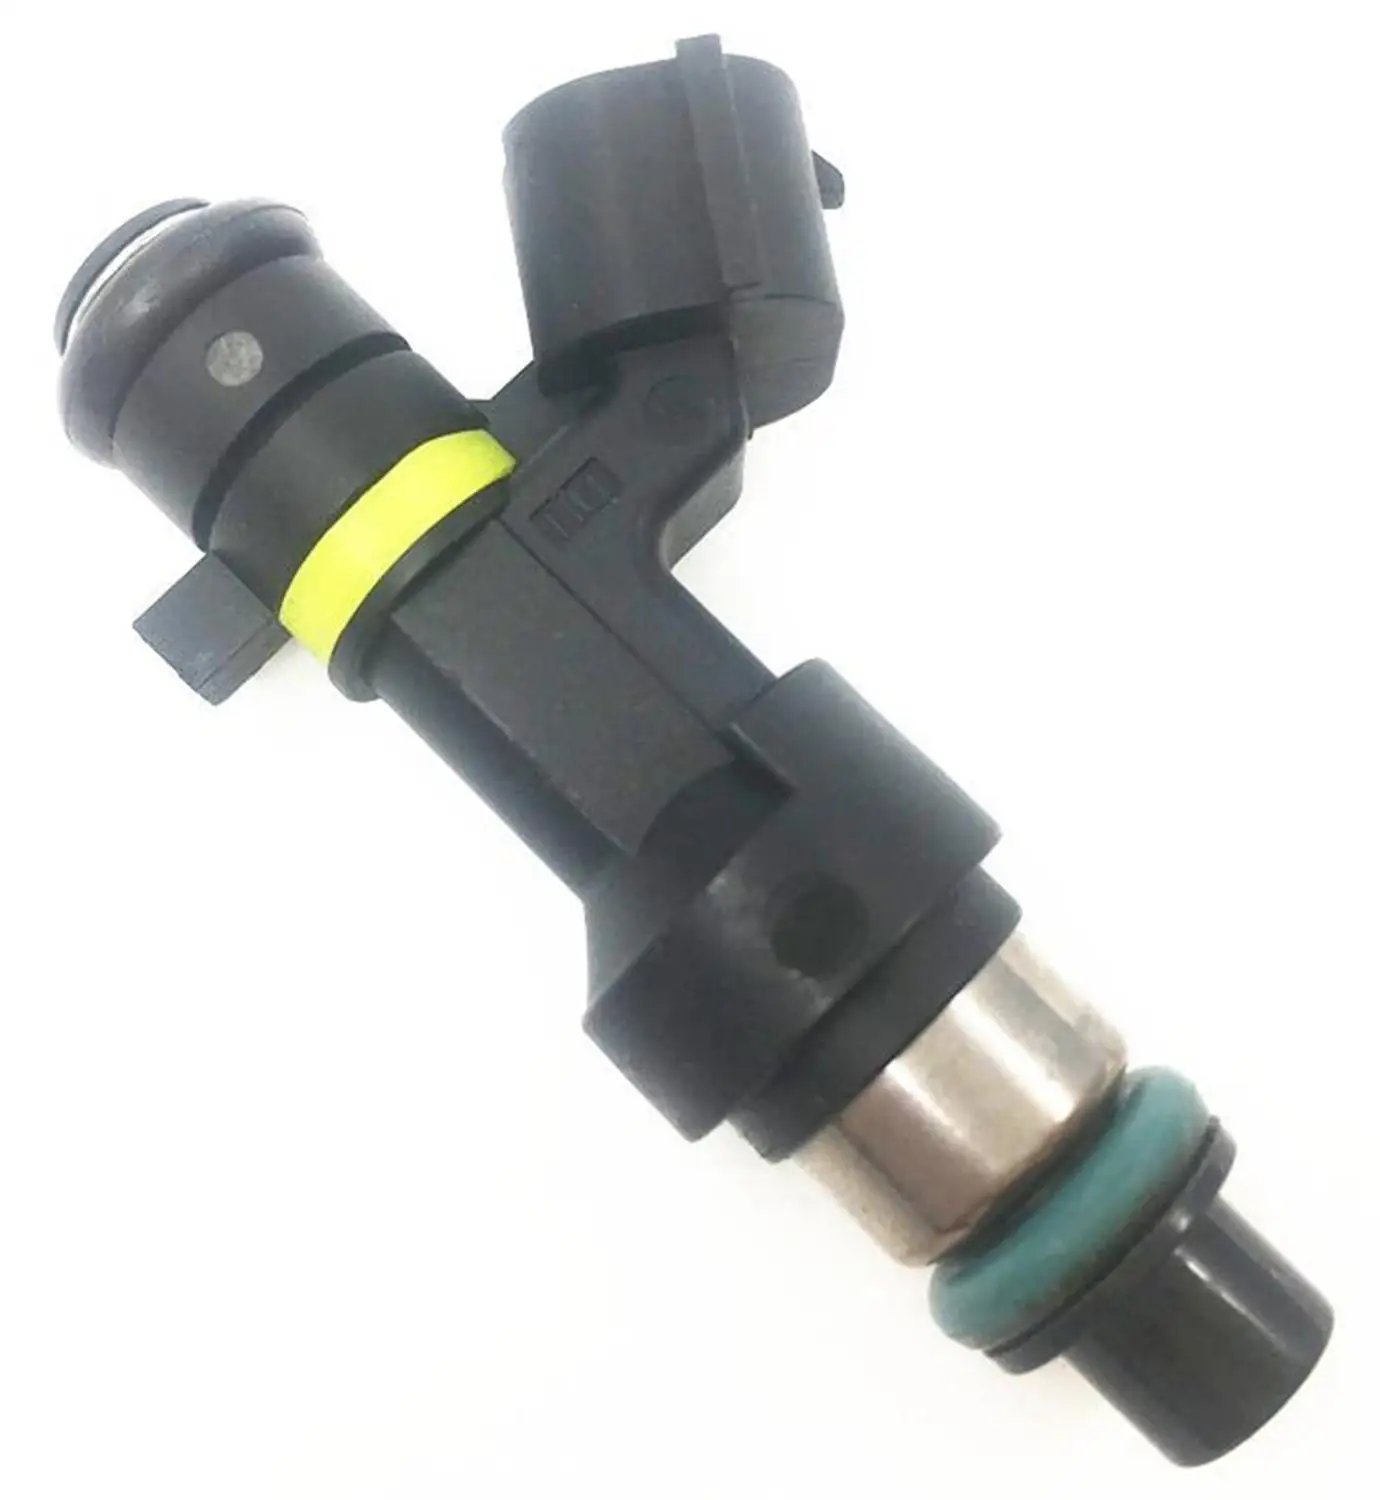 

4pcs High Quality Fuel Nozzles 16600-EN200 FBY2850 Fuel Injectors Fit for Nissan Sylphy G11 Teana 2.0 Bluebird Tiida Motor 1800